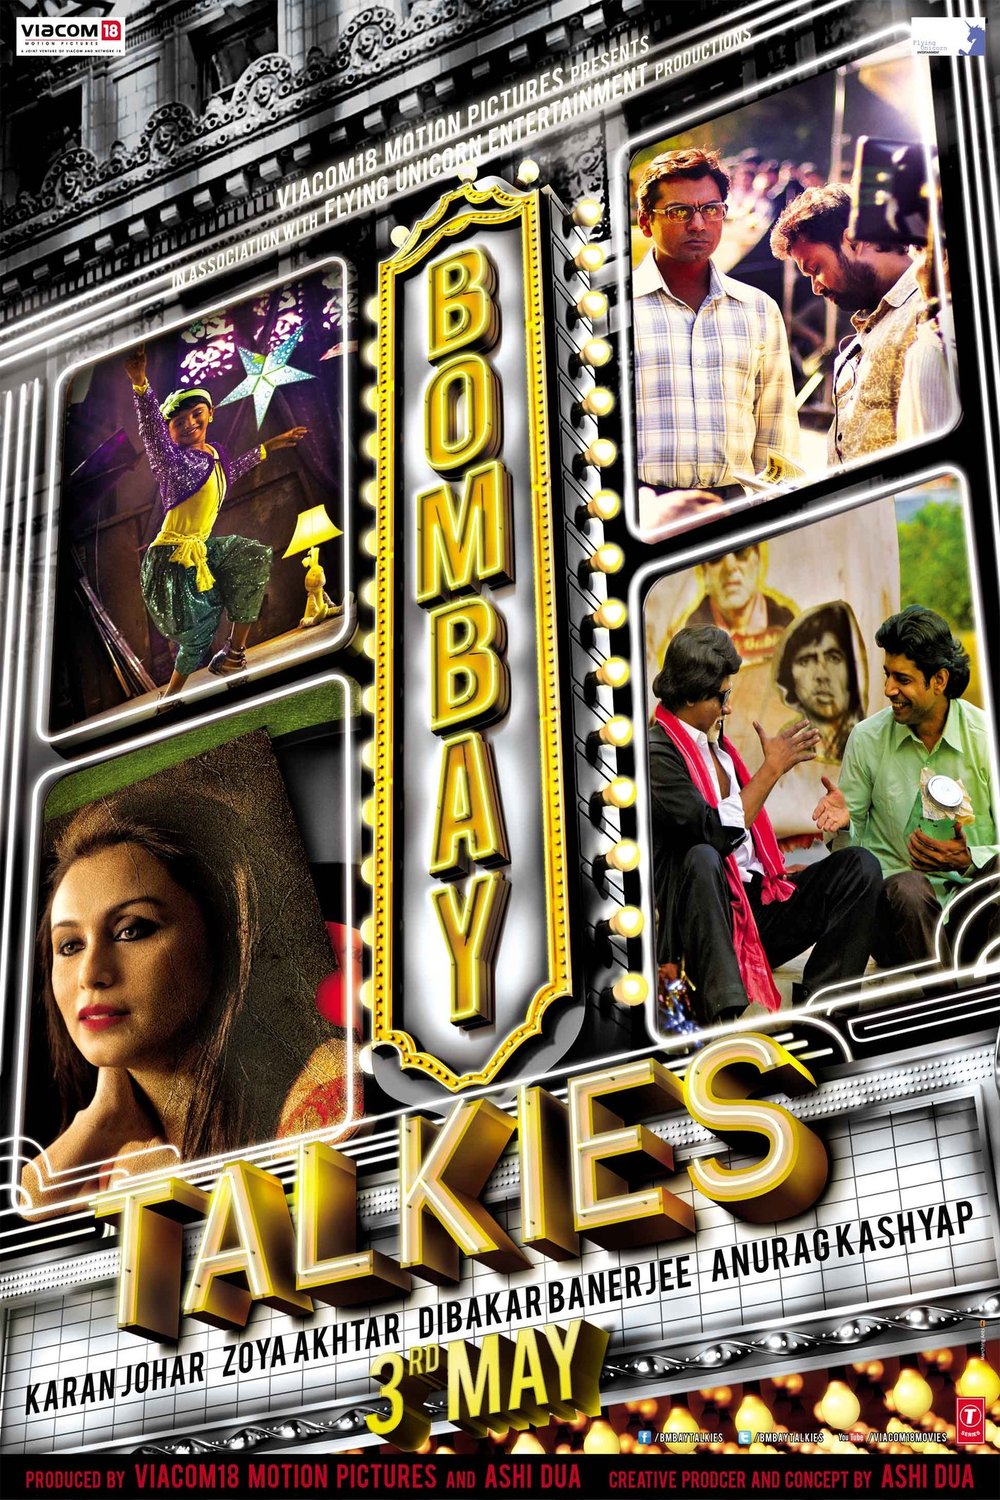 Hindi poster of the movie Bombay Talkies